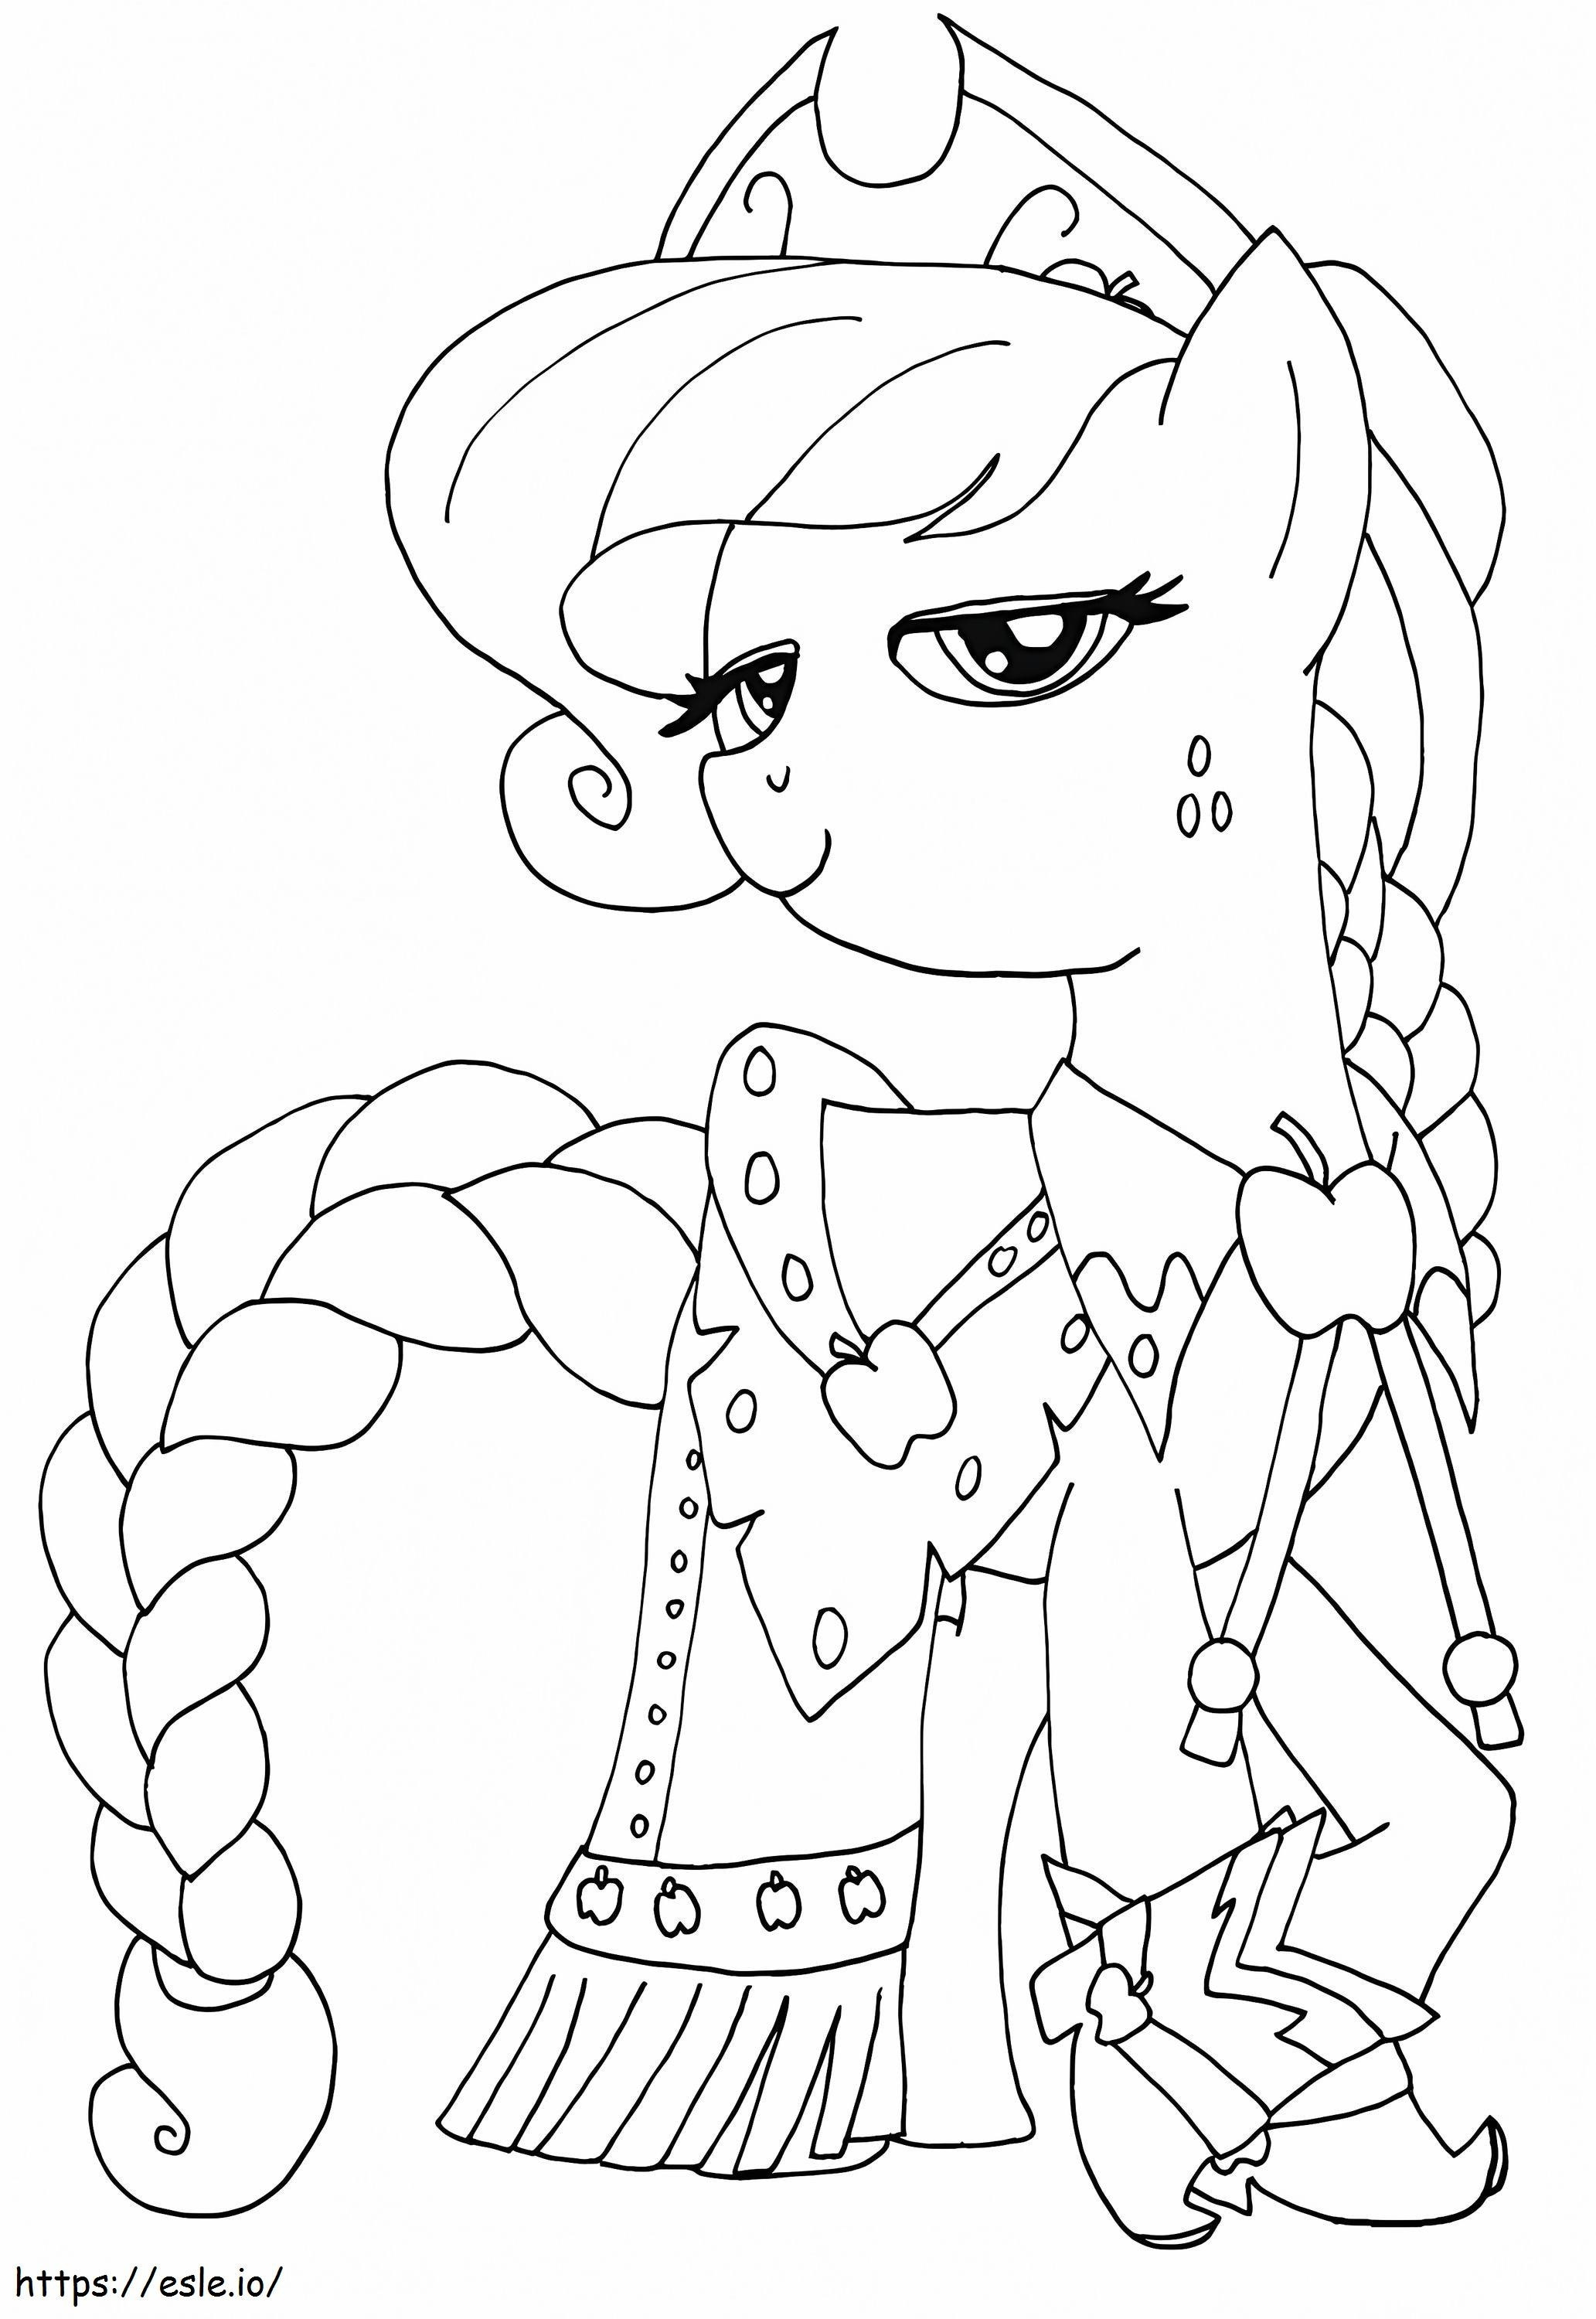 Princess Applejack coloring page